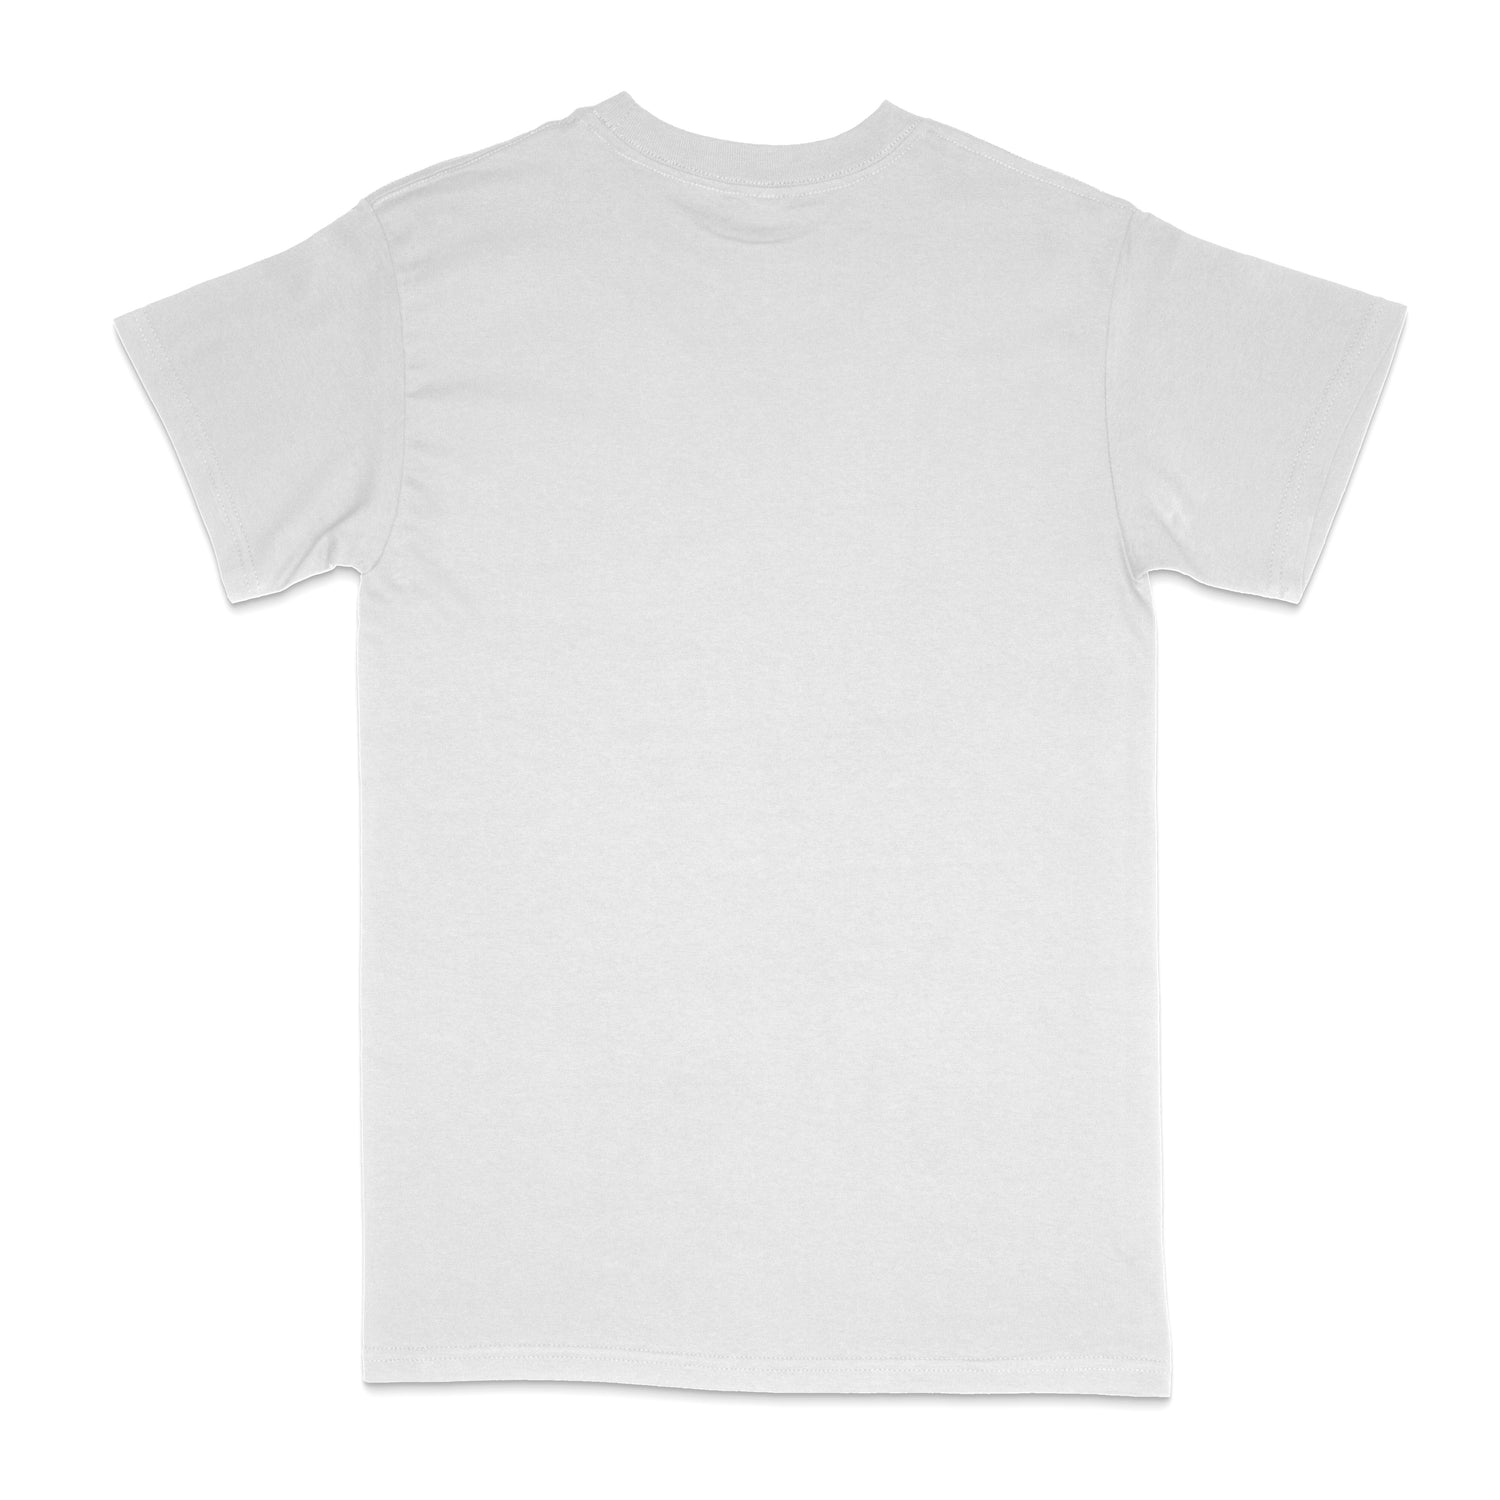 Camiseta extragrande blanca KAV